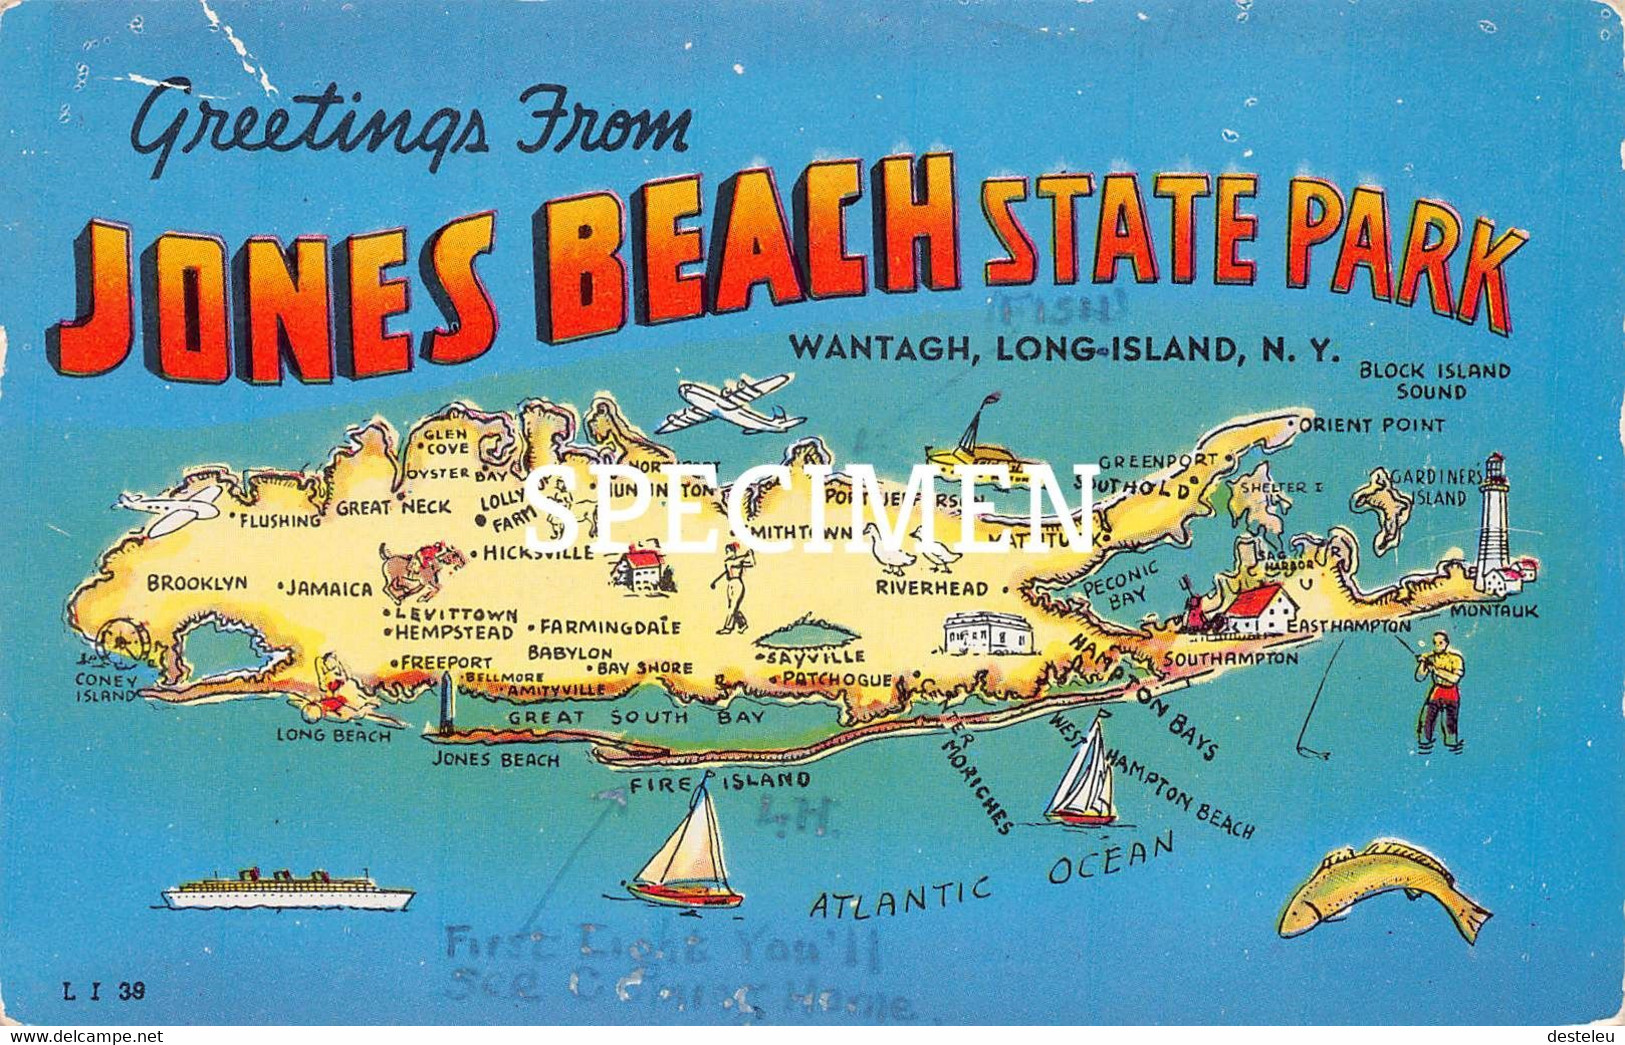 Jones Beach State Park - Wantagh Long-Island - Long Island